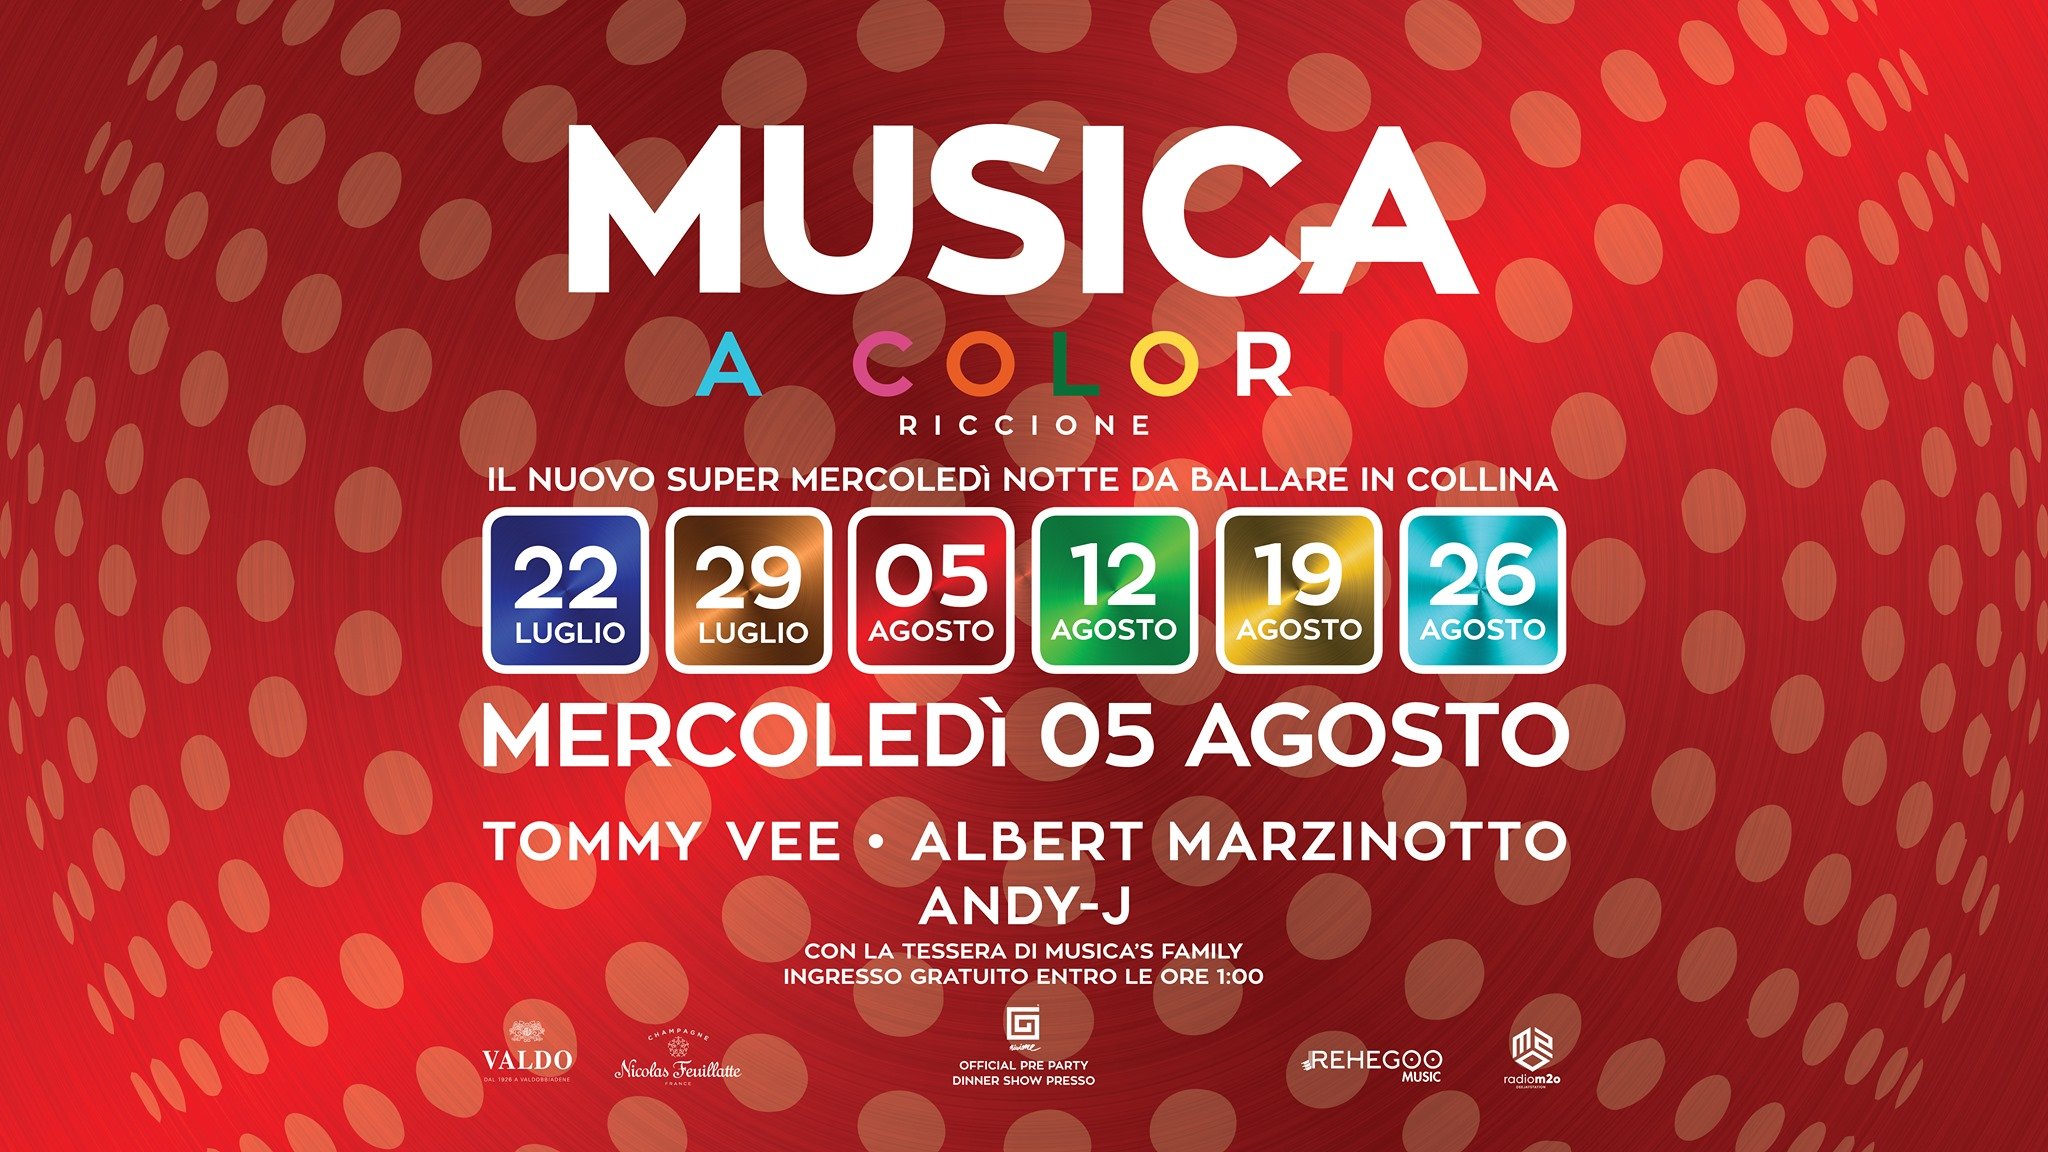 Discoteca Musica Riccione, dj Tommy Vee, Albert Marzinotto ed Andy J